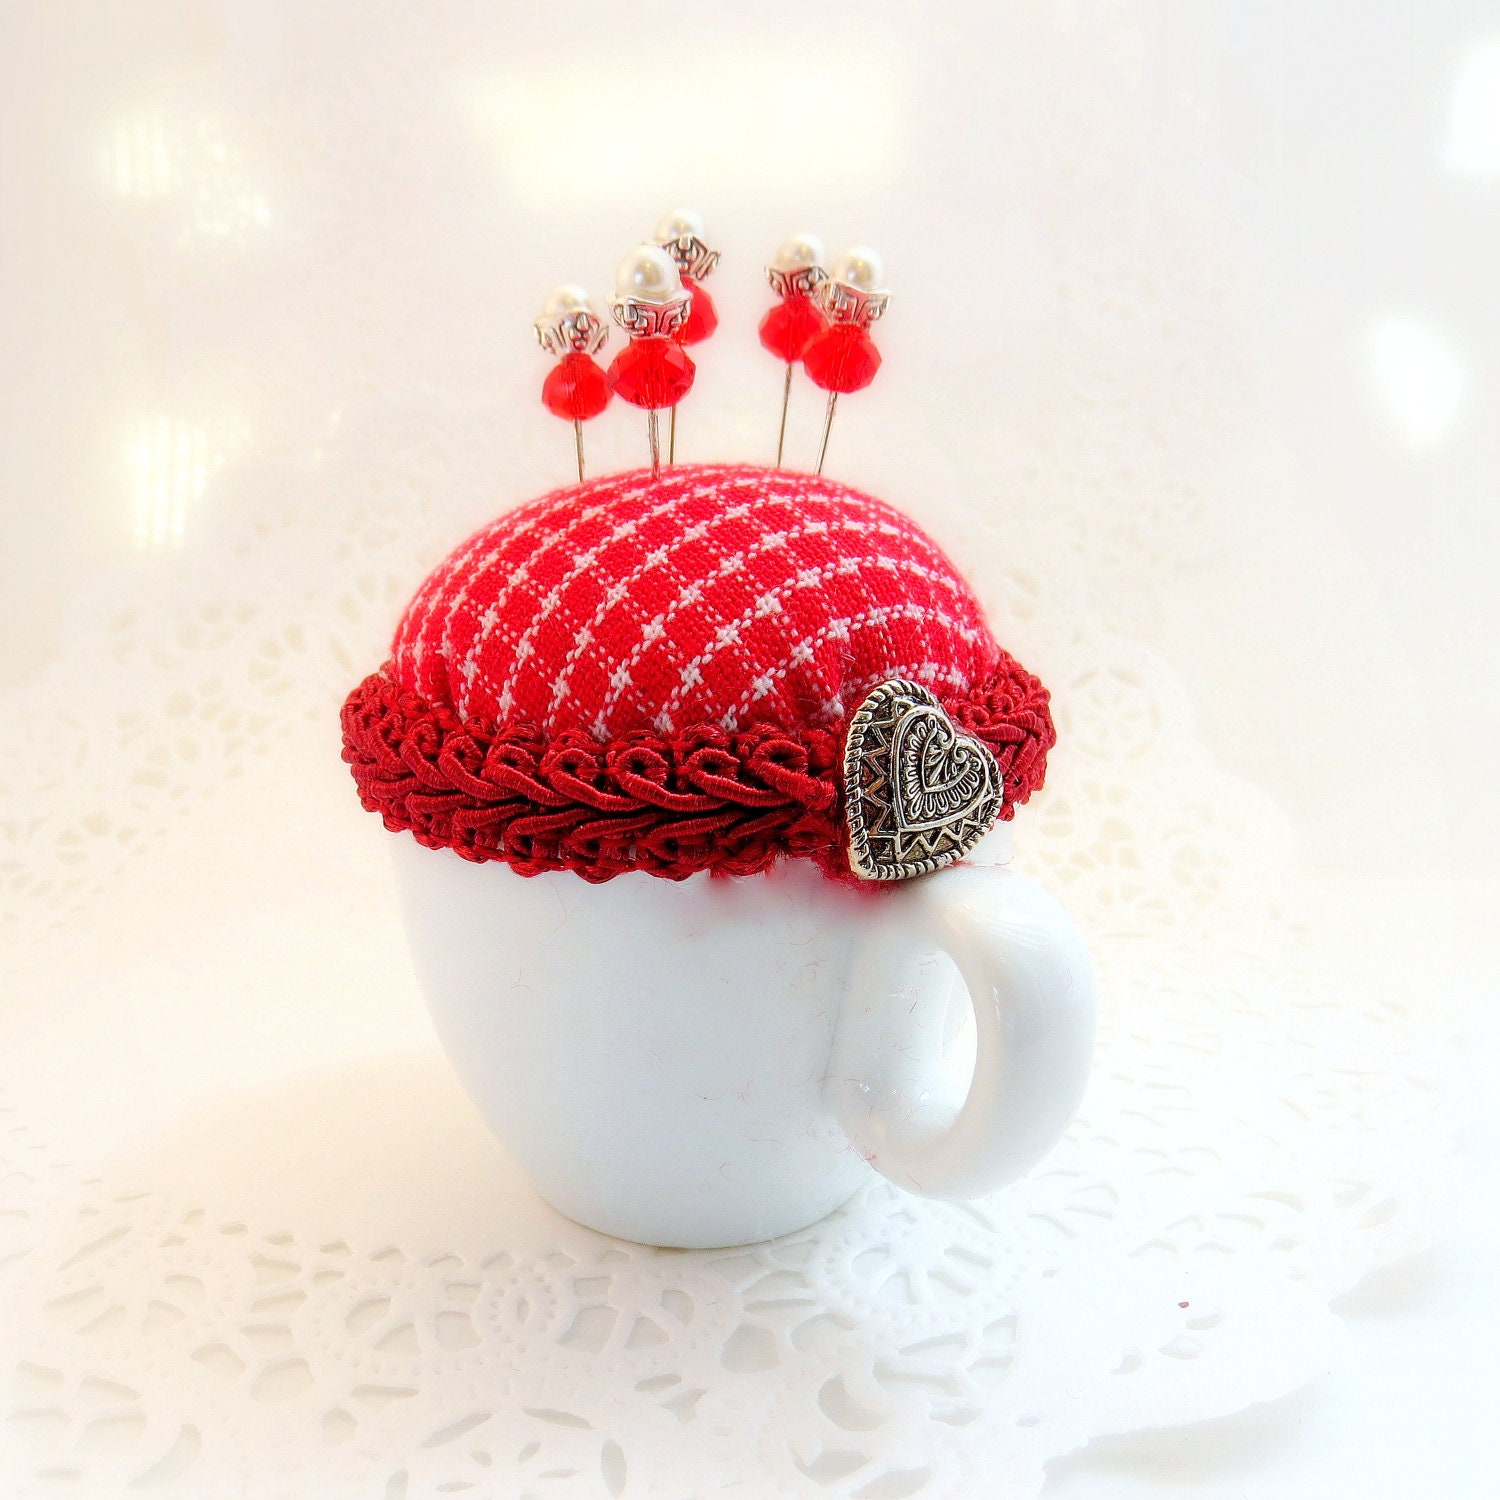 Needlecraft pincushion cottage style demitasse cup Valentines Day heart red white homespun fabric straight pins TAGT tenX